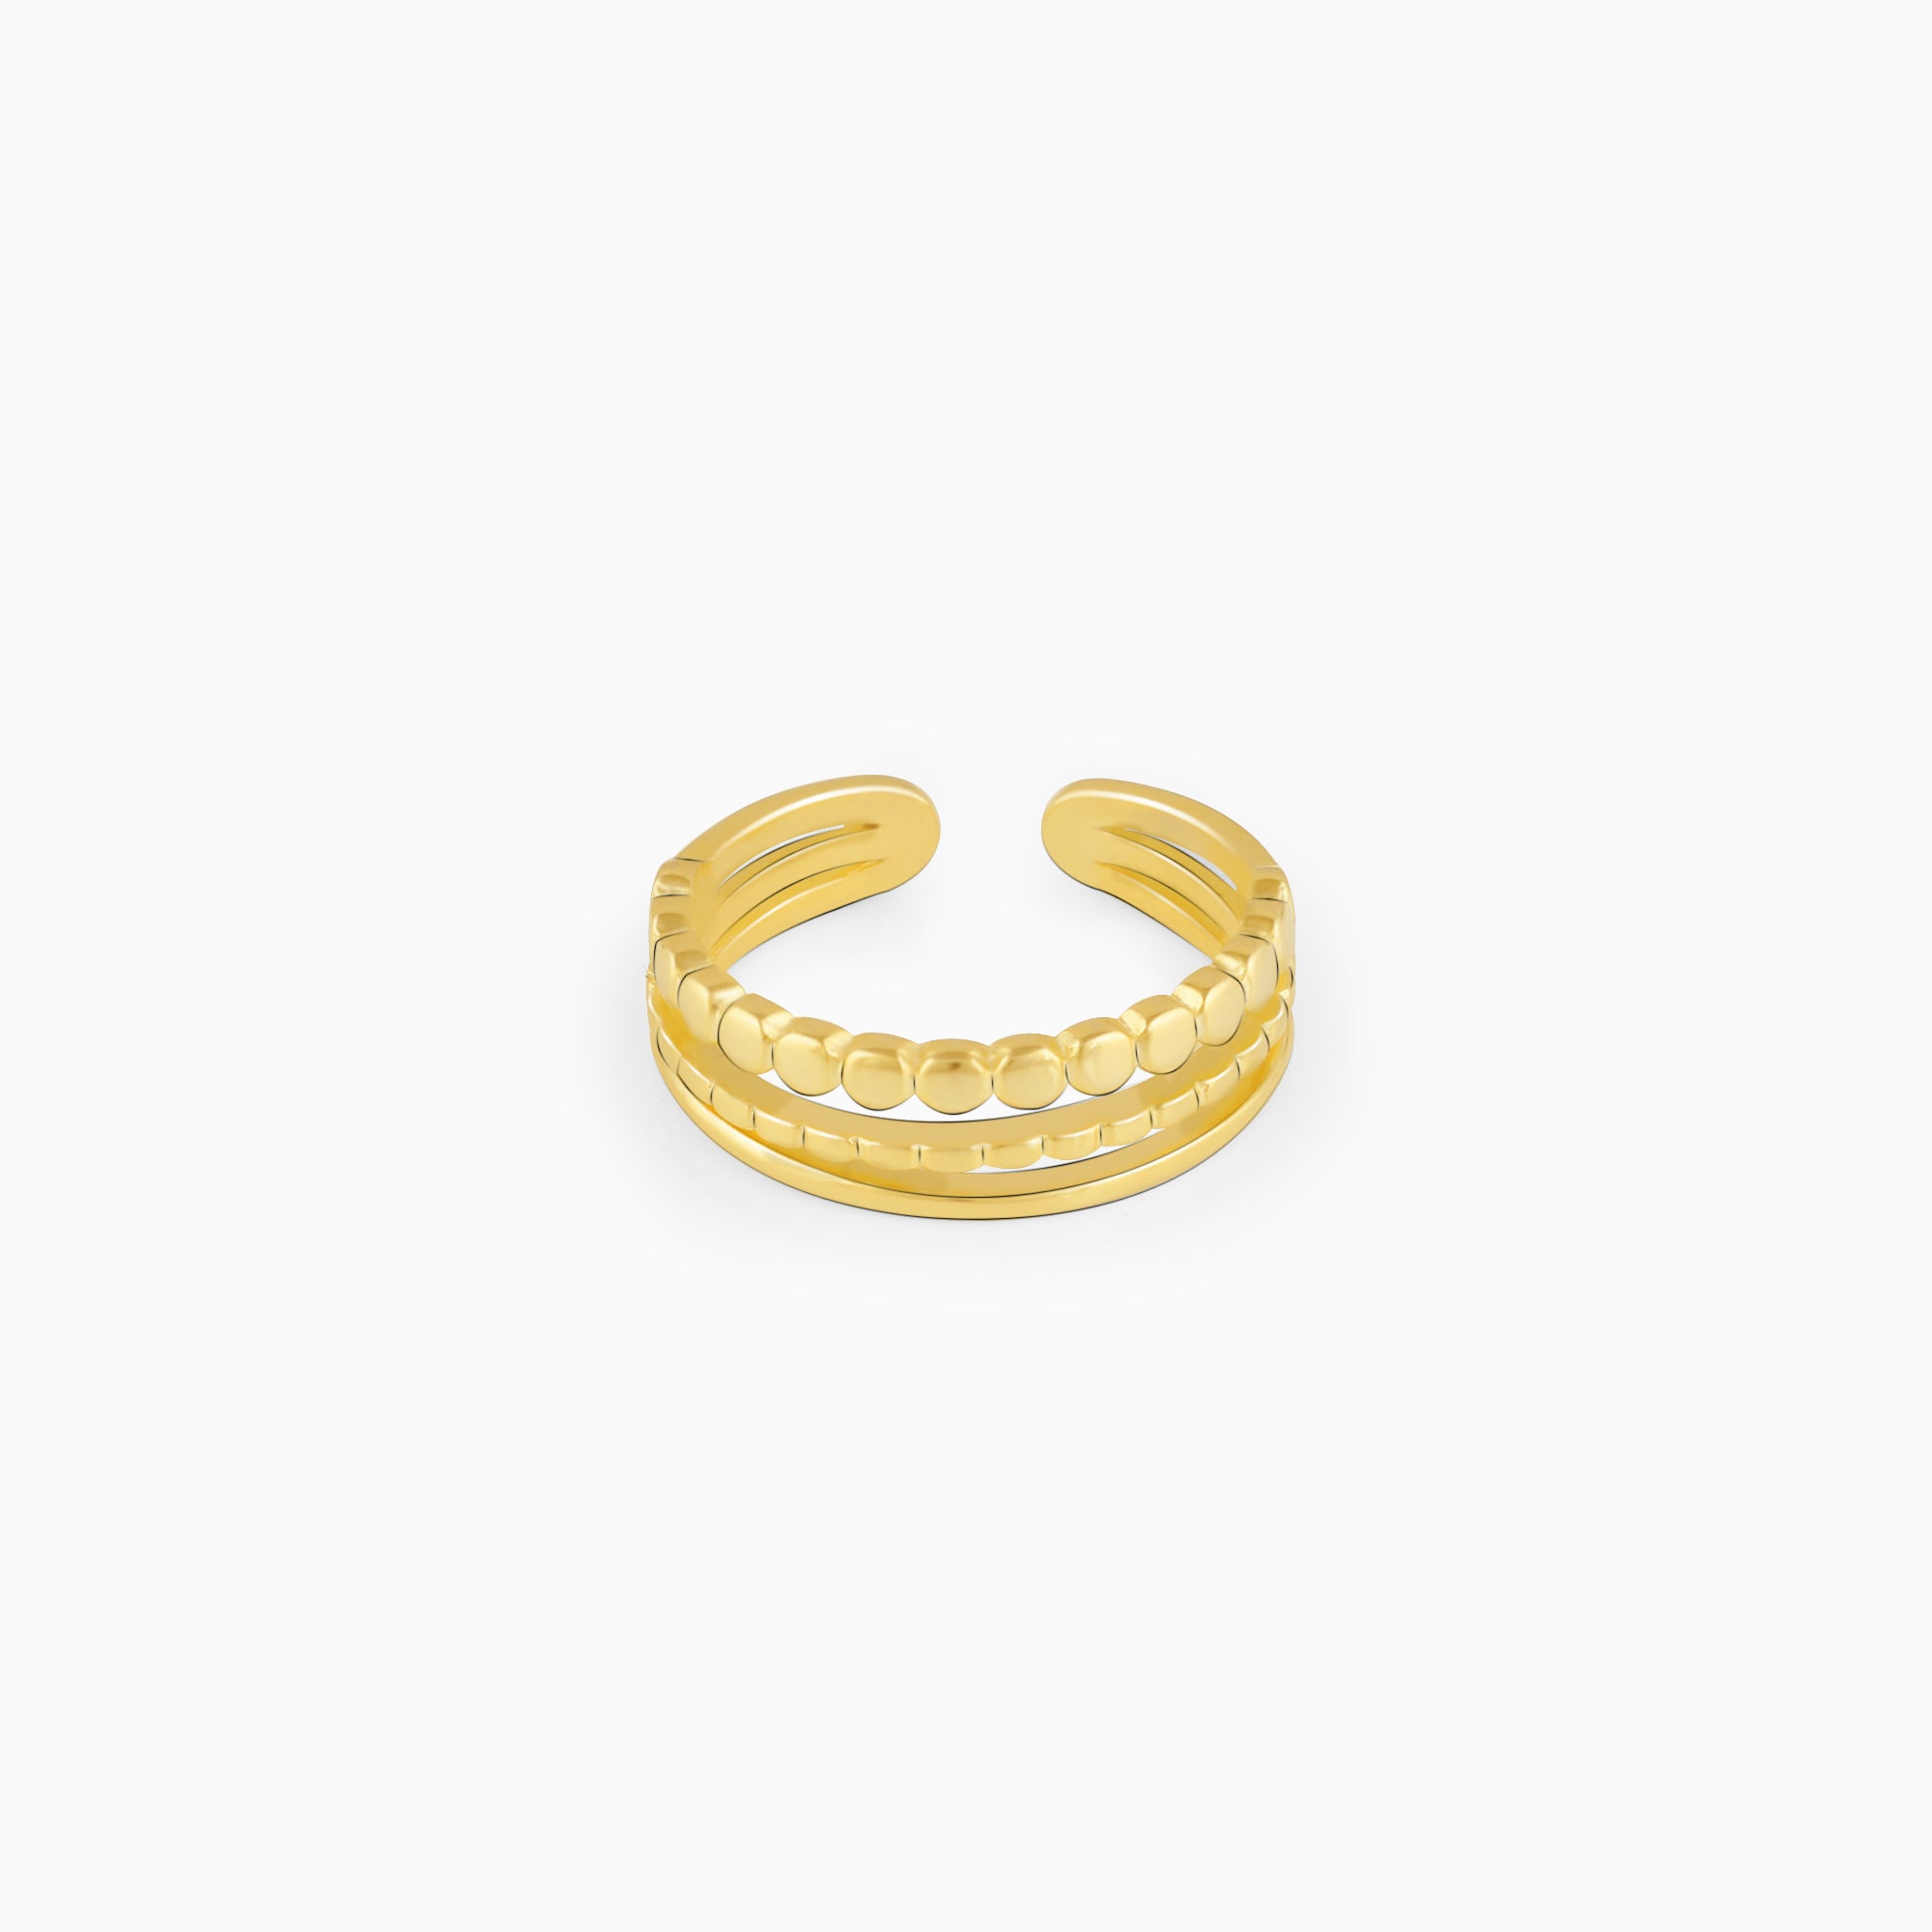 Champagne Rose Cut Diamond Ring in Palladium White Gold - EC Design Jewelry